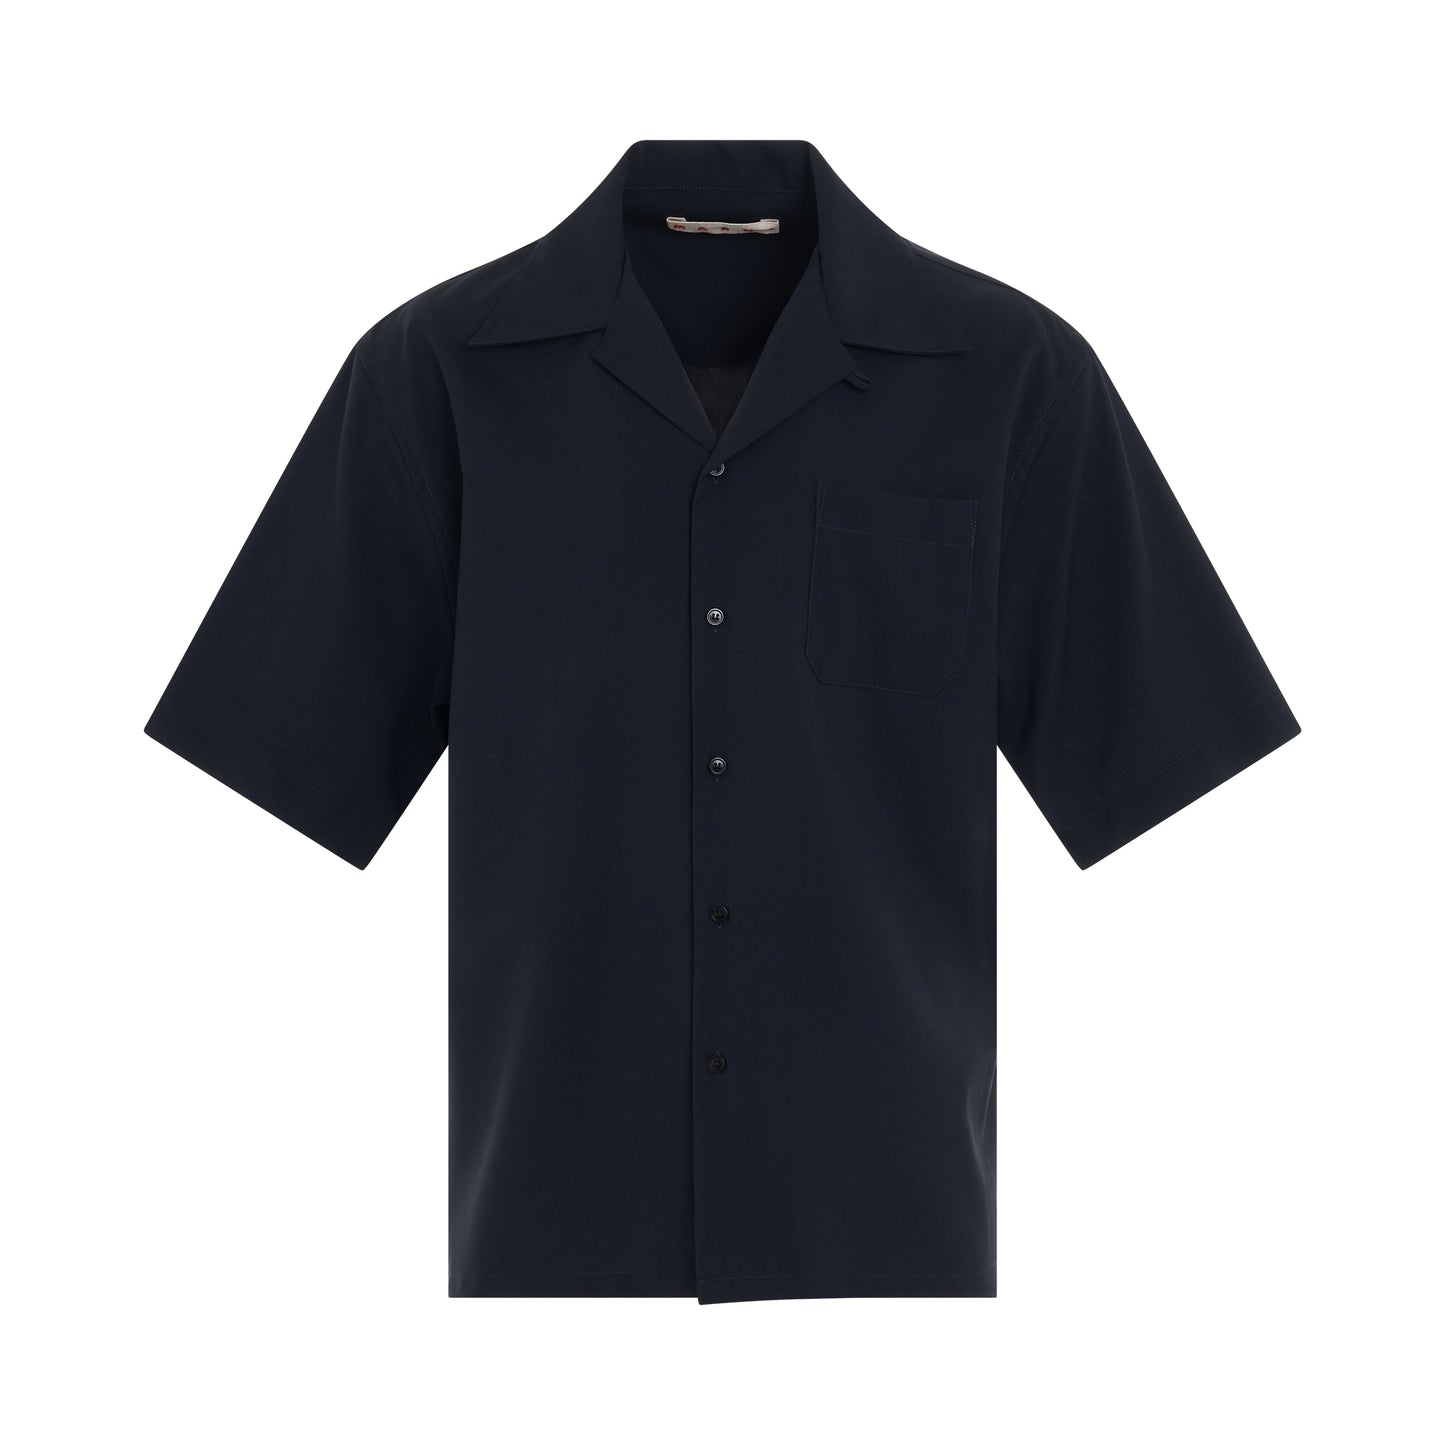 Wool Bowling Shirt in Blue Black